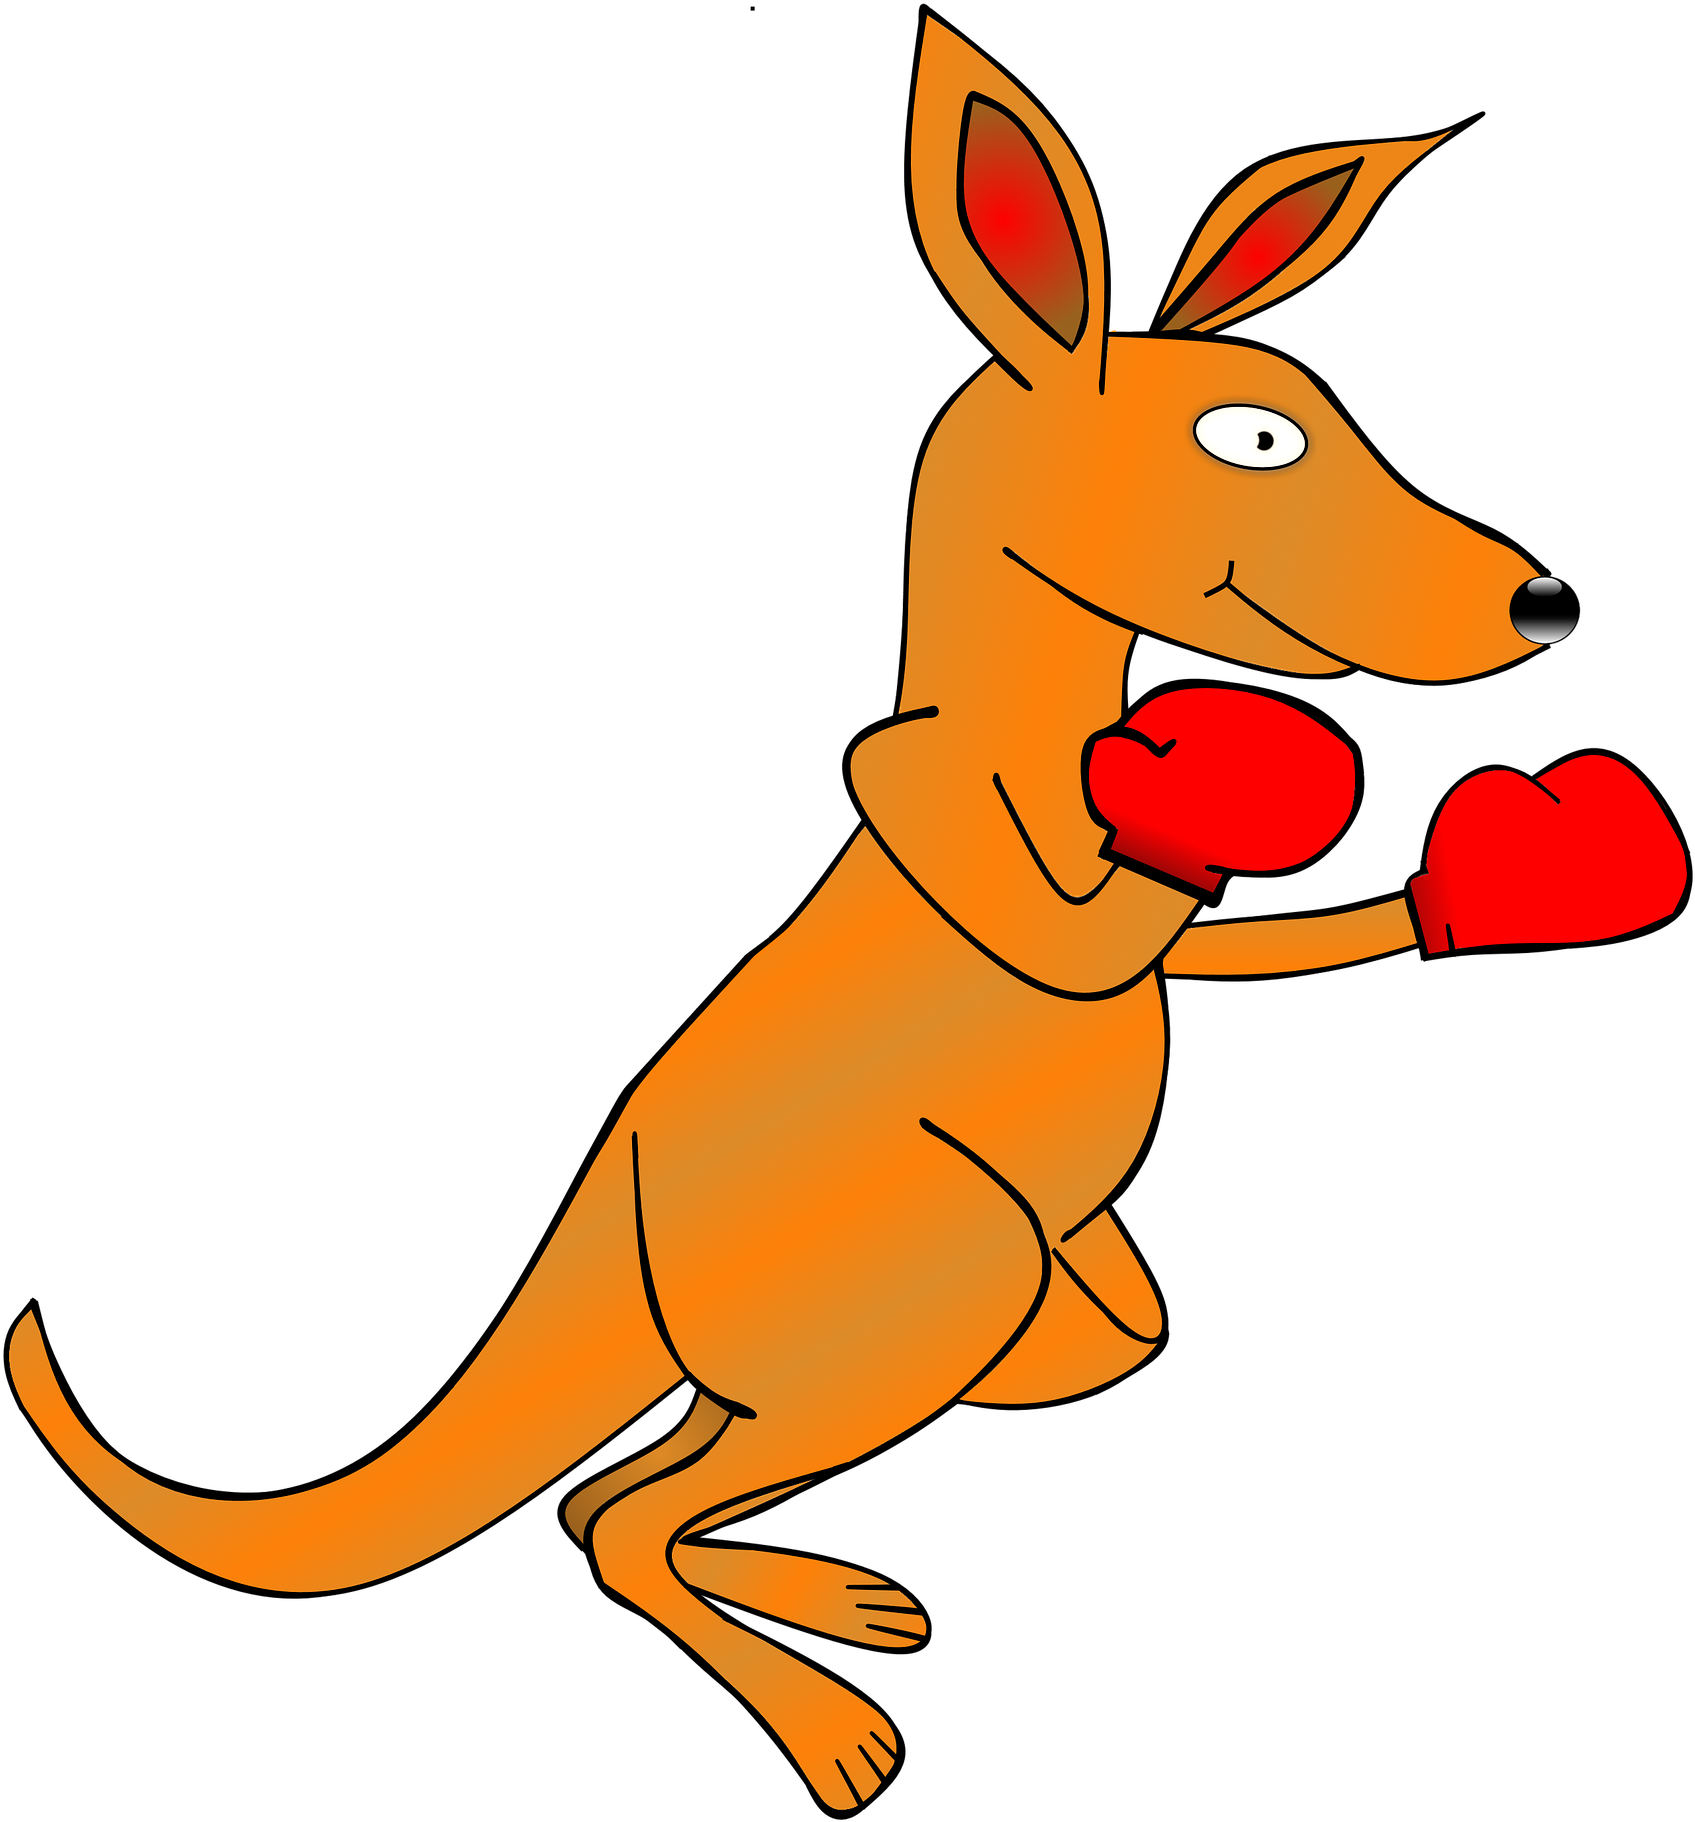 Boxing Kangaroo Cartoon PNG image